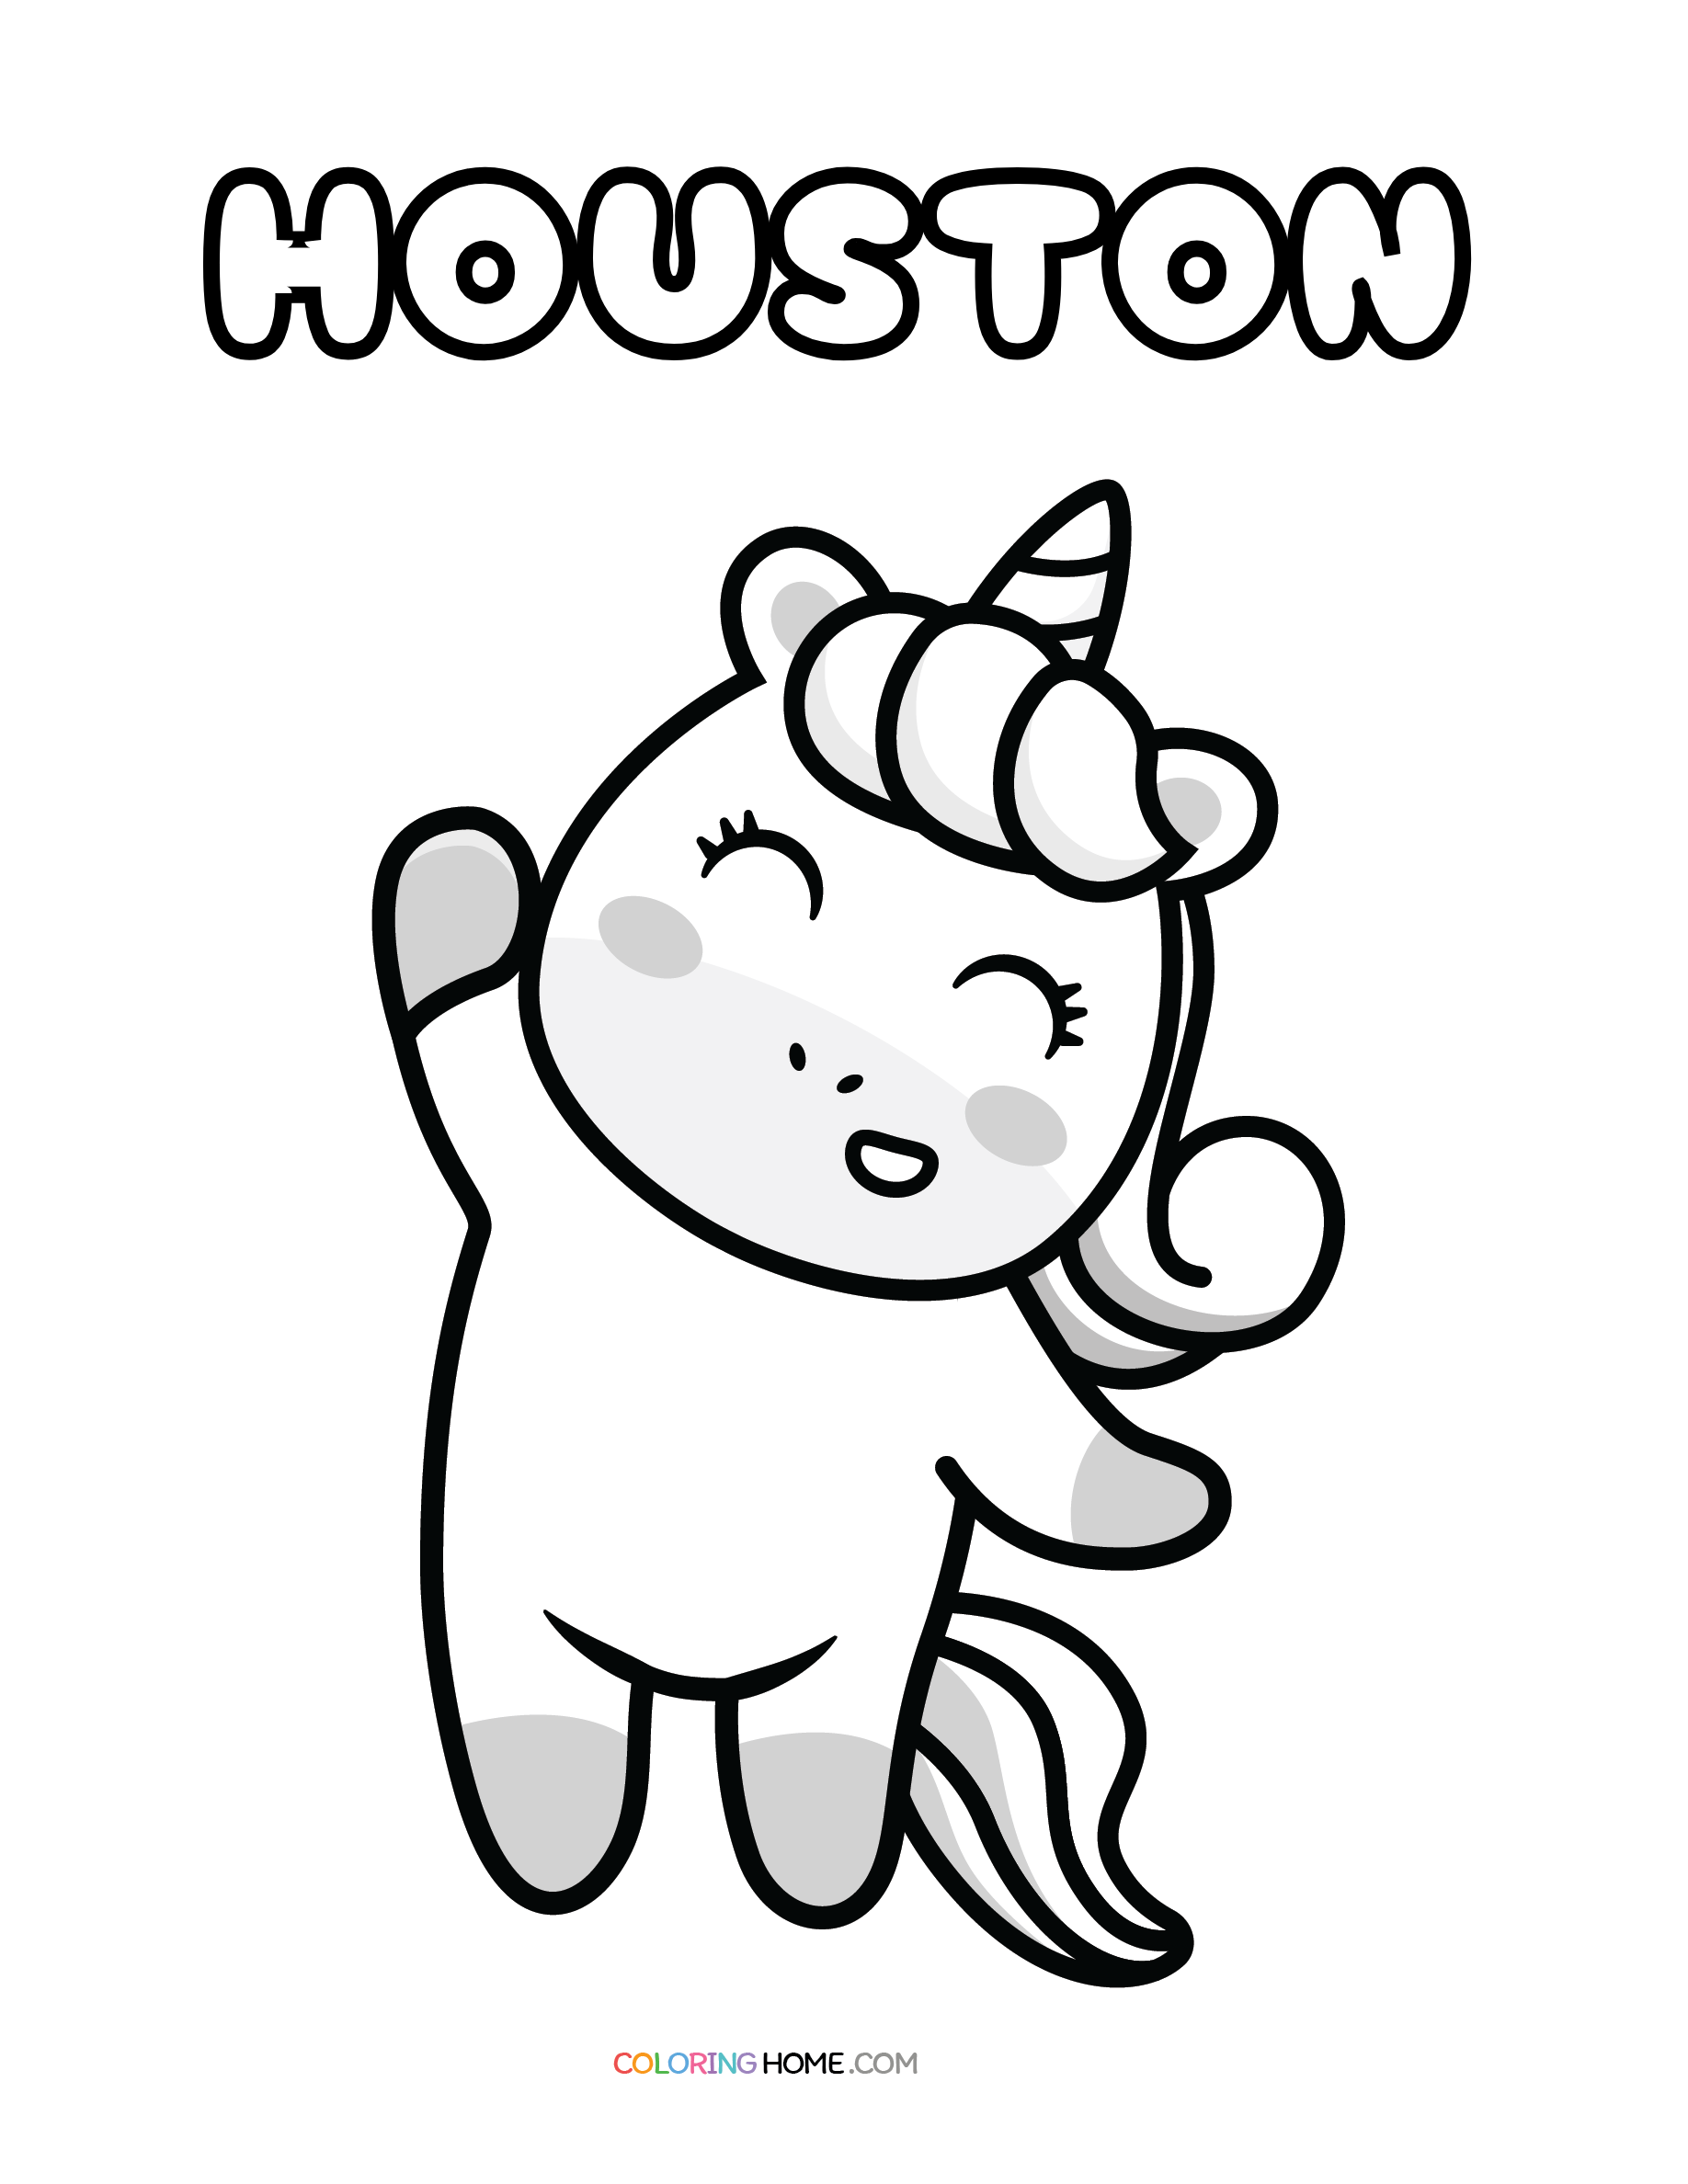 Houston unicorn coloring page